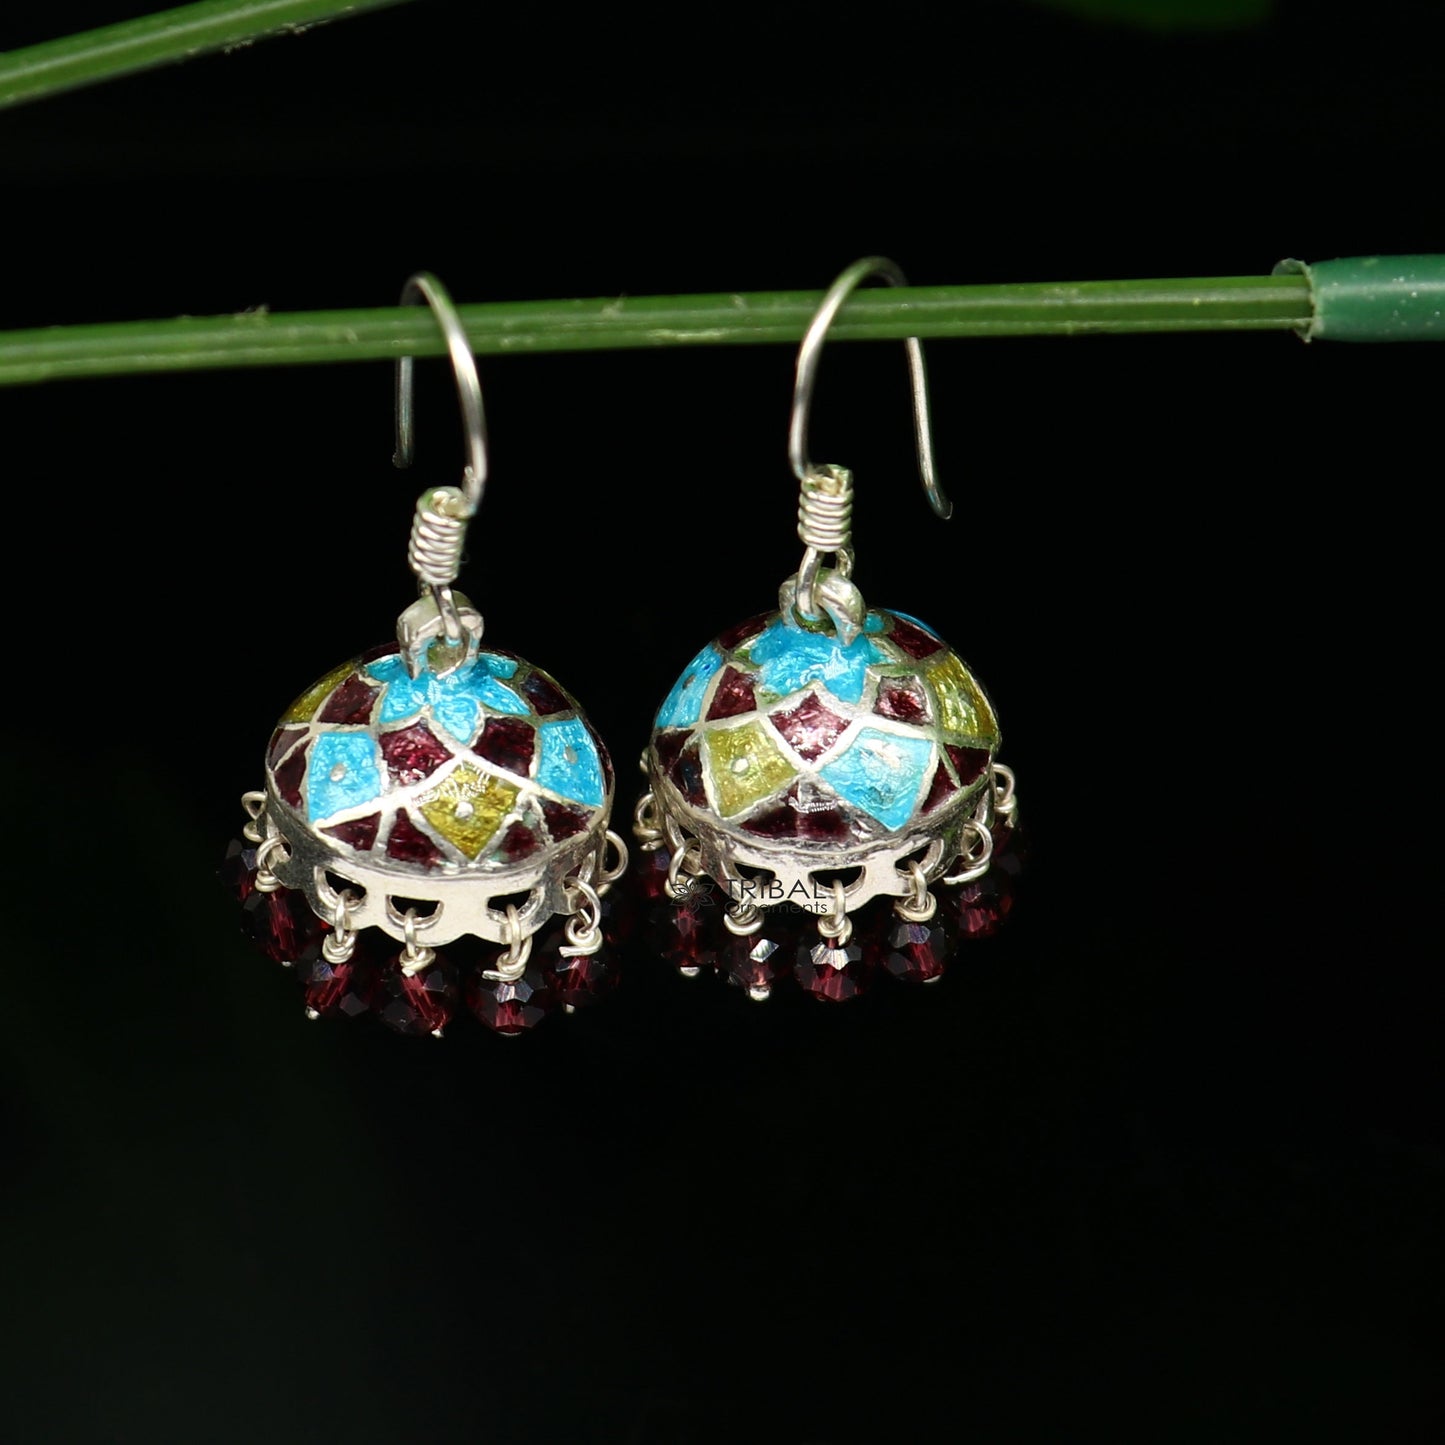 Traditional Unique handmade enamel work 925 sterling silver Stylish colorful hoops earring chandelier jhumka hanging drops earrings  s1195 - TRIBAL ORNAMENTS